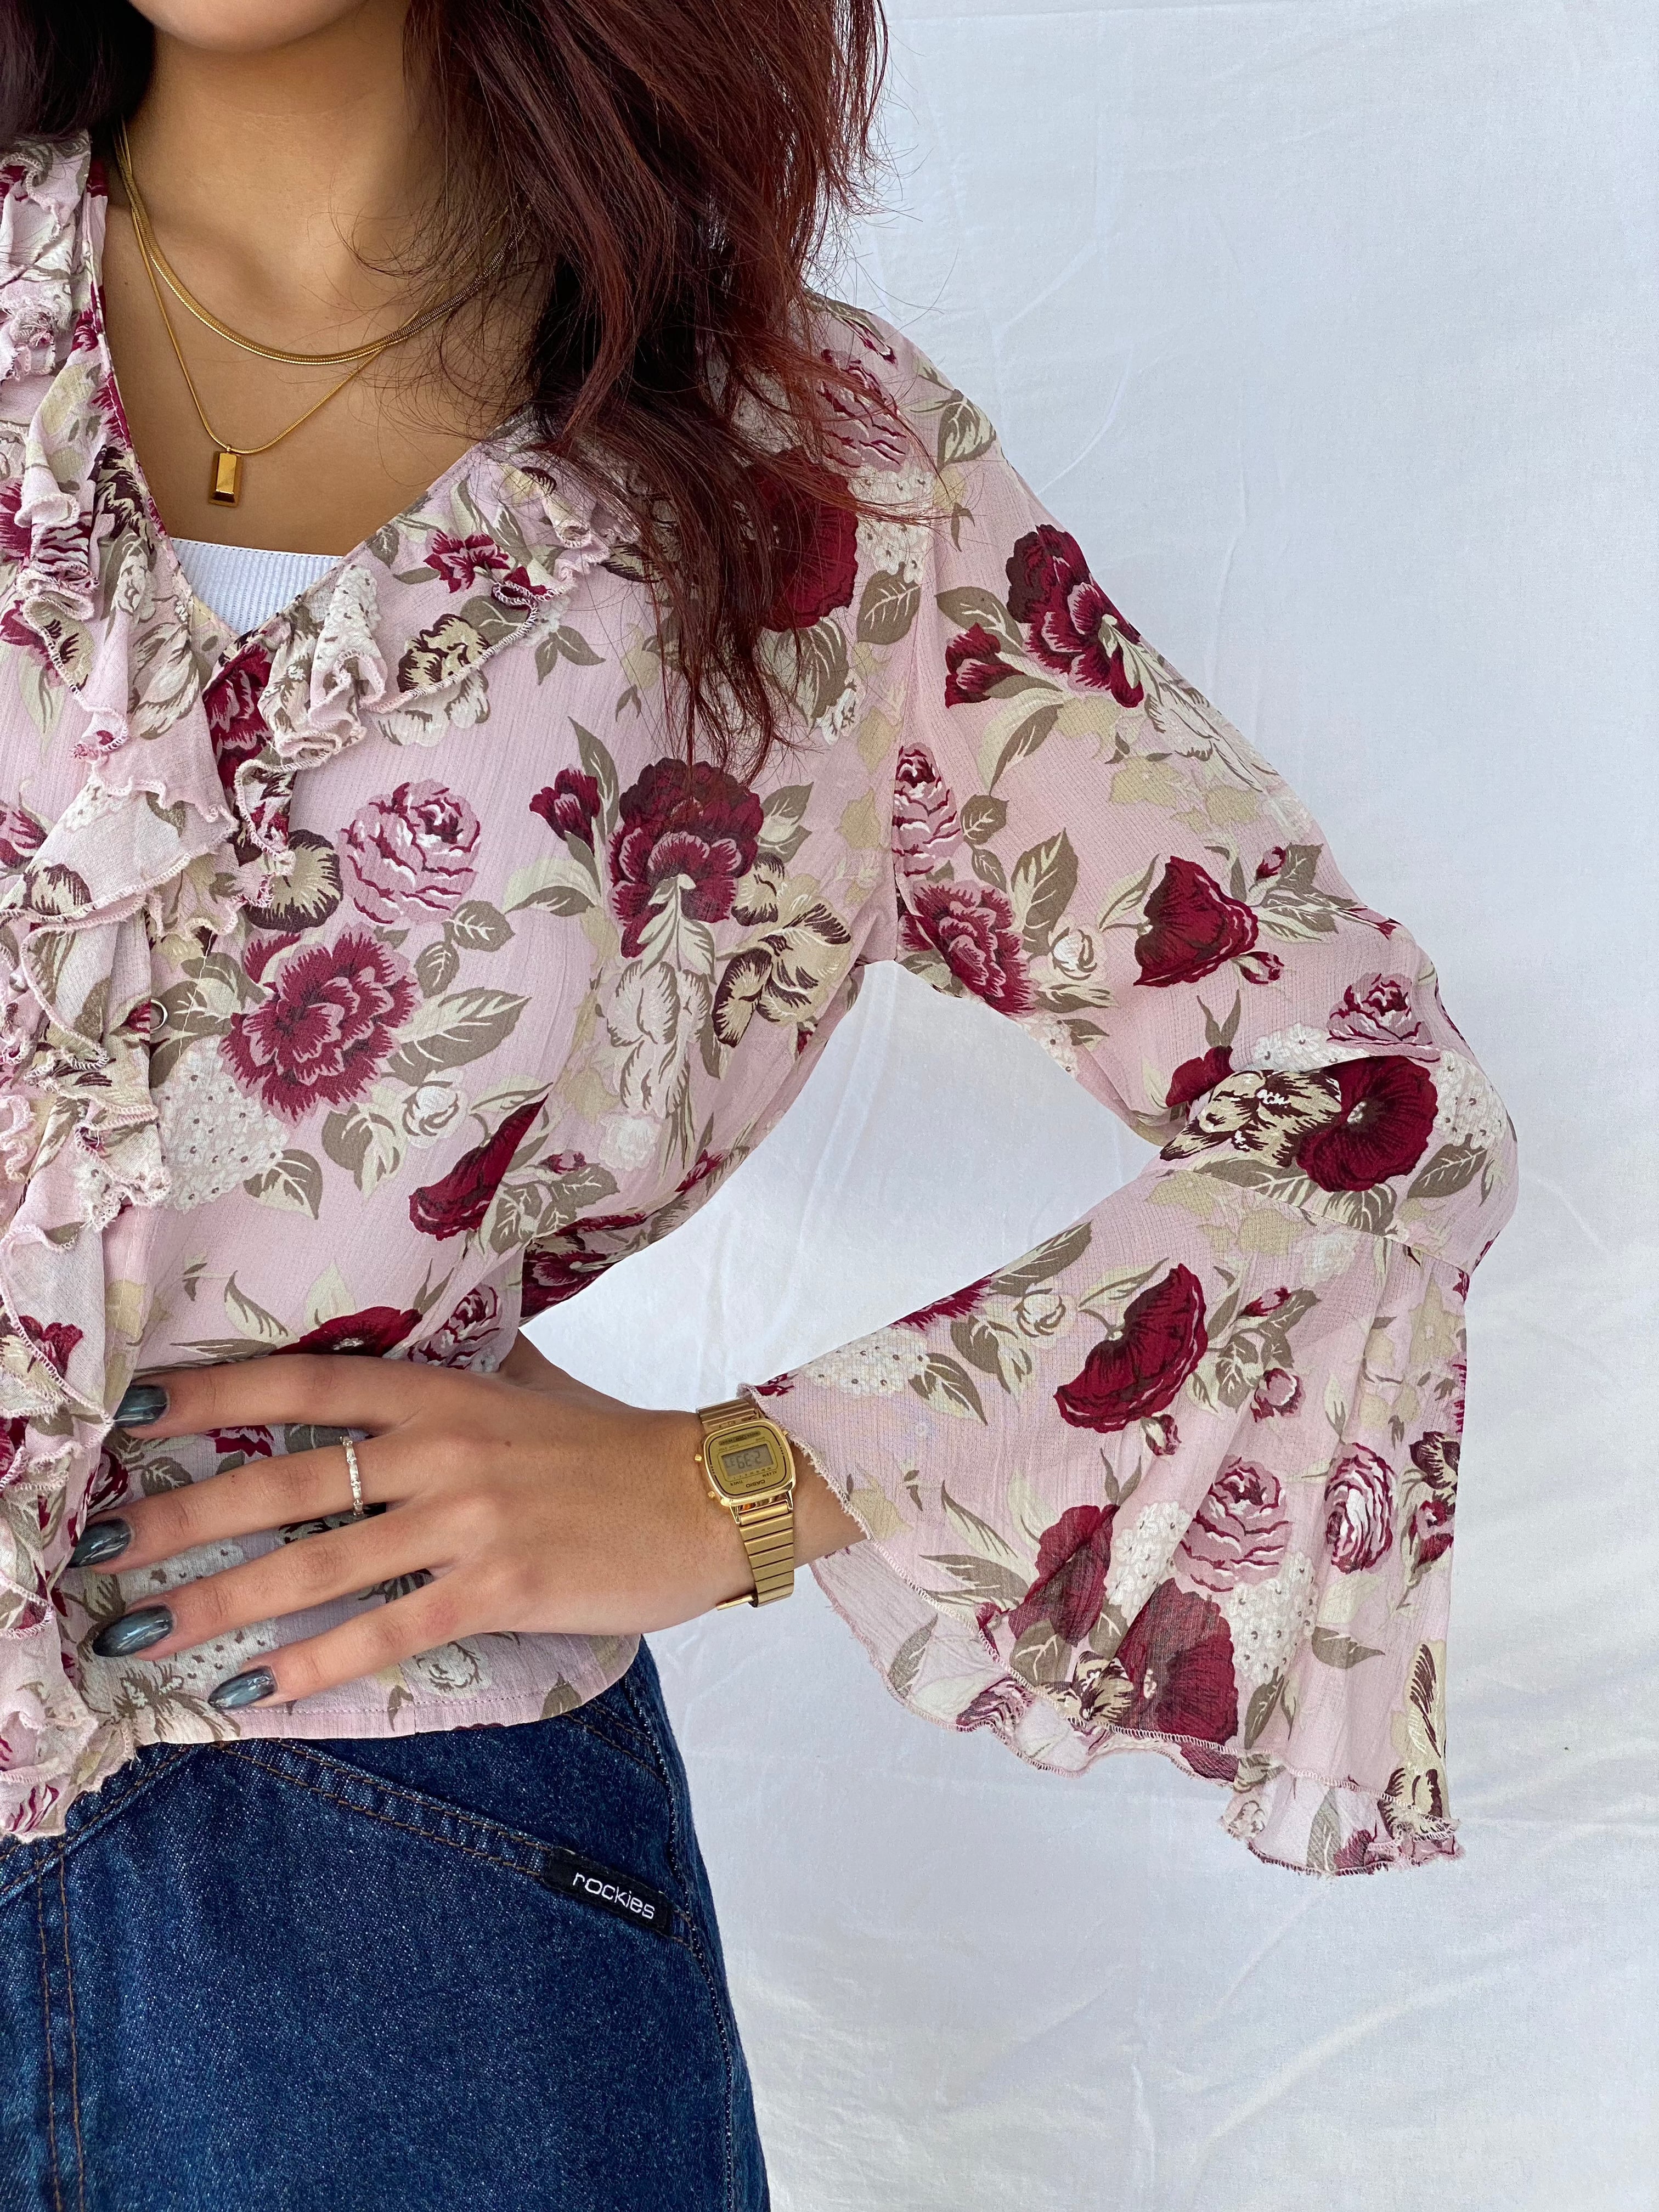 XX BY MEXX Floral Sheer Shirt - Balagan Vintage Sheer Shirt floral, floral mesh, sheer, sheer shirt